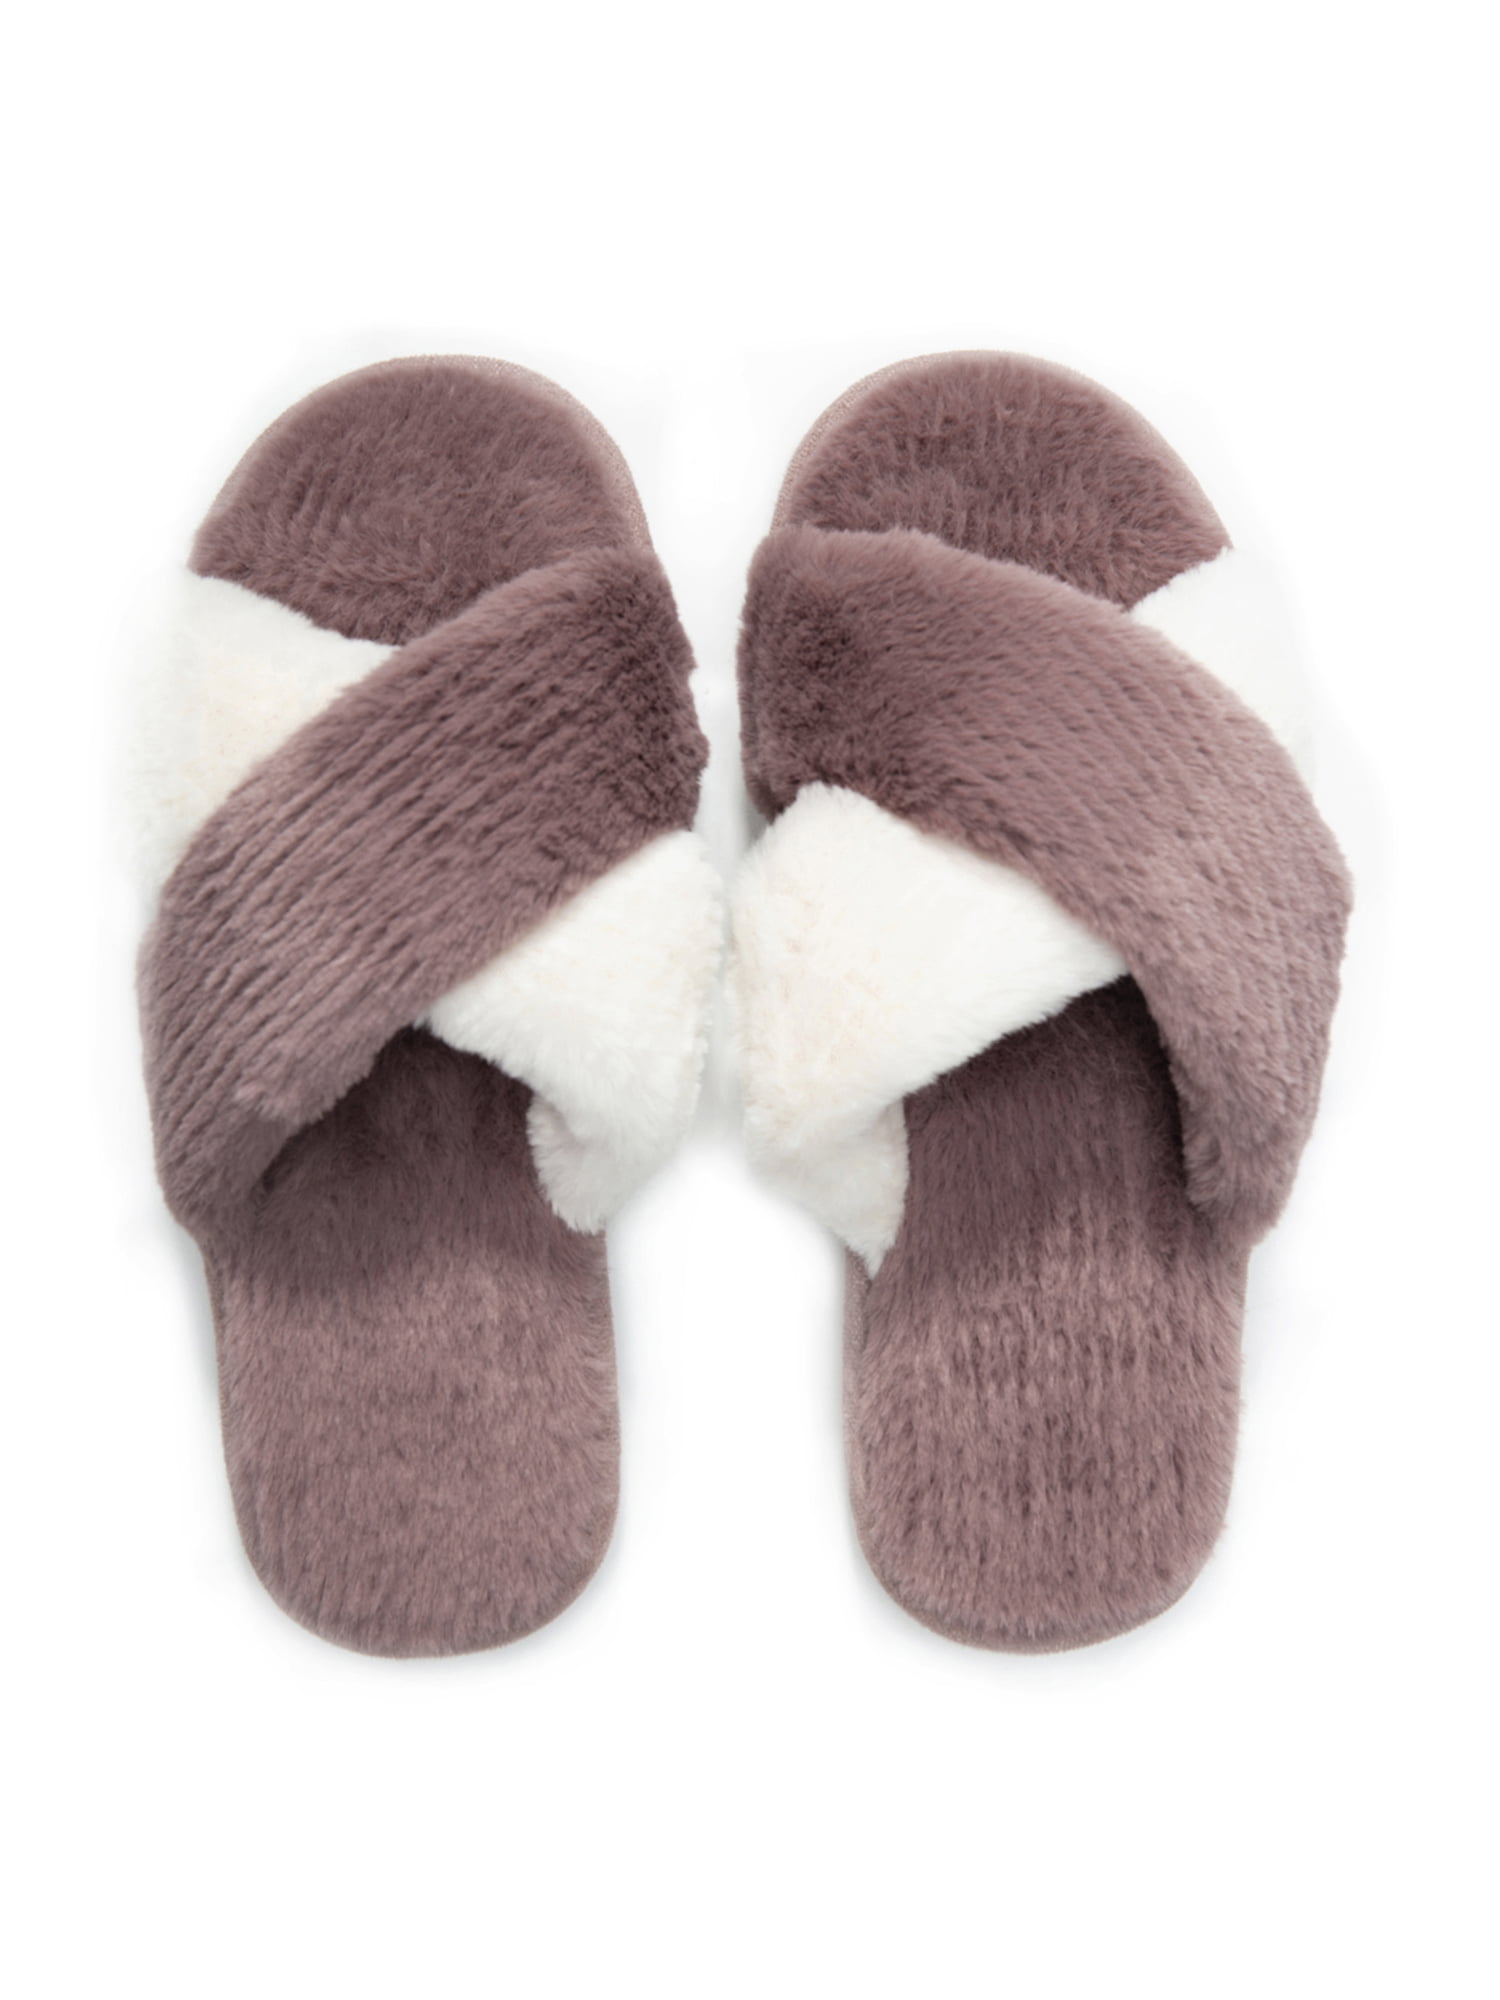 PESTOR Women's Fuzzy Slippers Open Toe Slide Slippers Faux Fur Fluffy Flats for Indoor/Outdoor/House/Bedroom